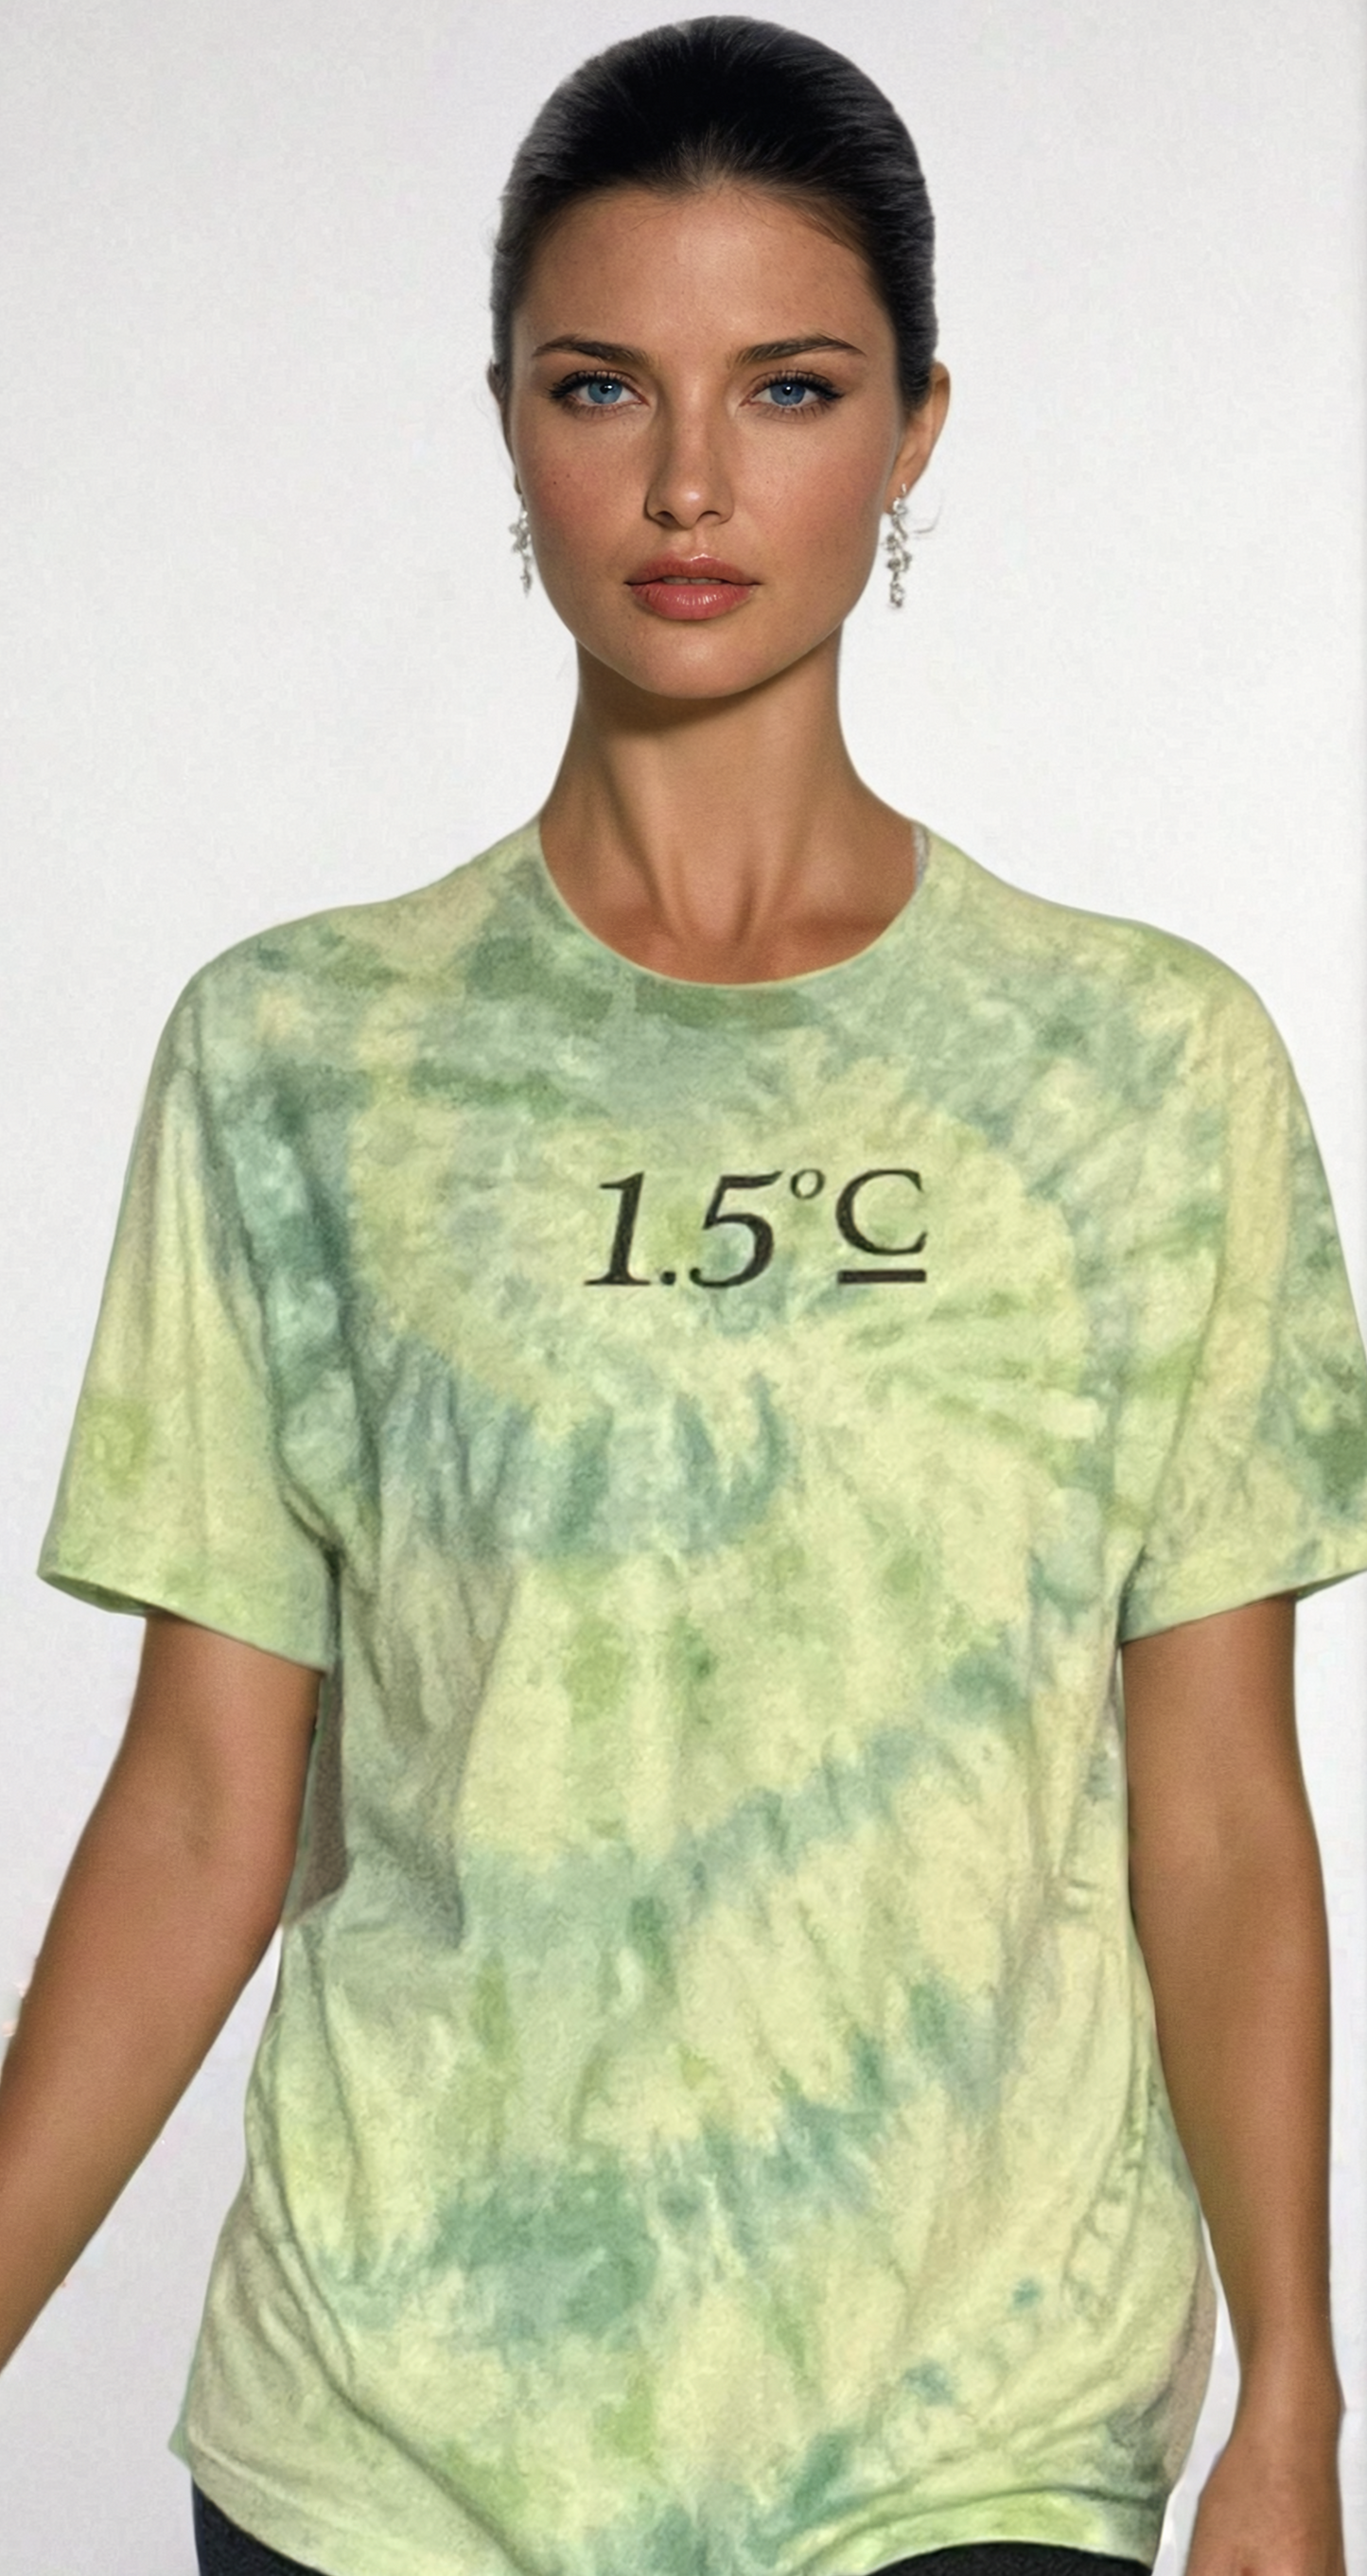 1.5C Global Warming Tie-Dye Unisex Tshirt